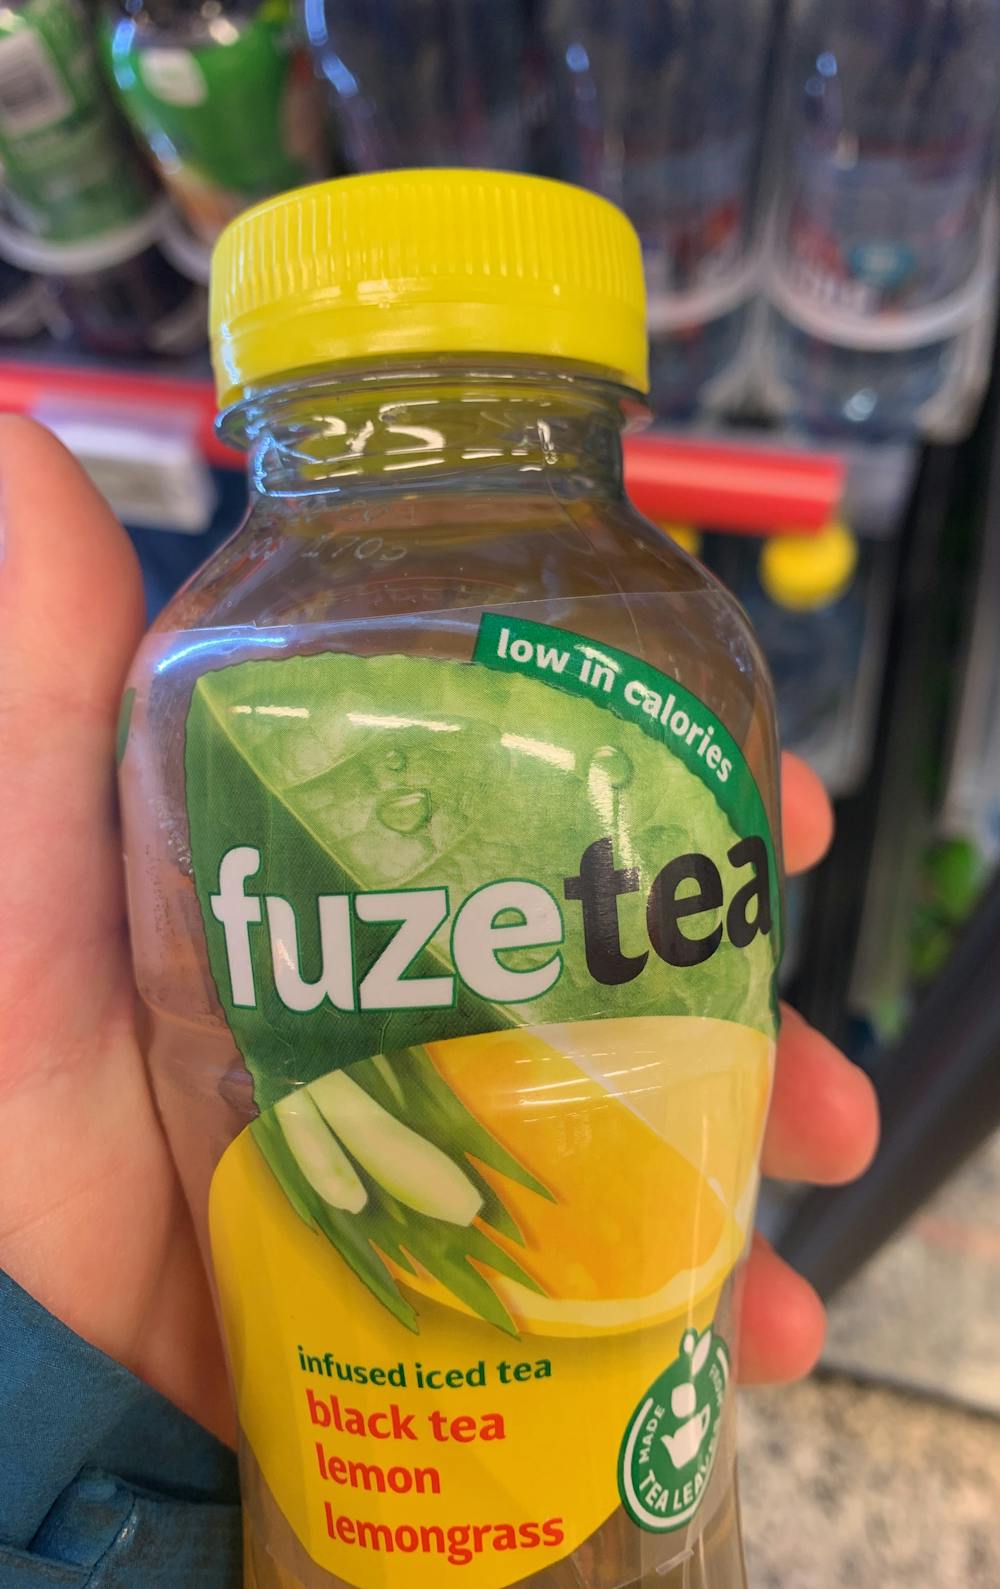 Fuze tea lemon & lemongrass, Fuze tea